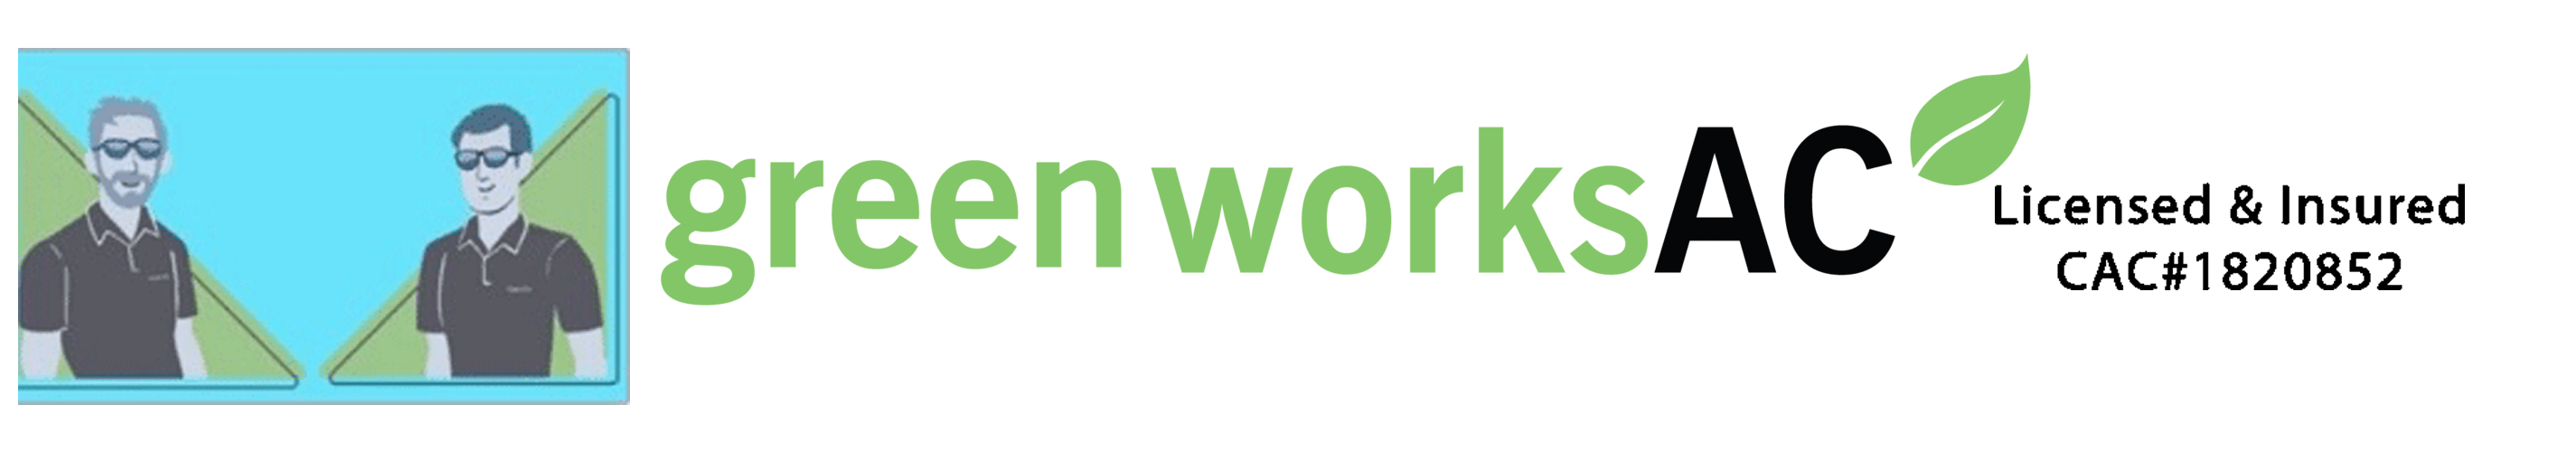 green works ac